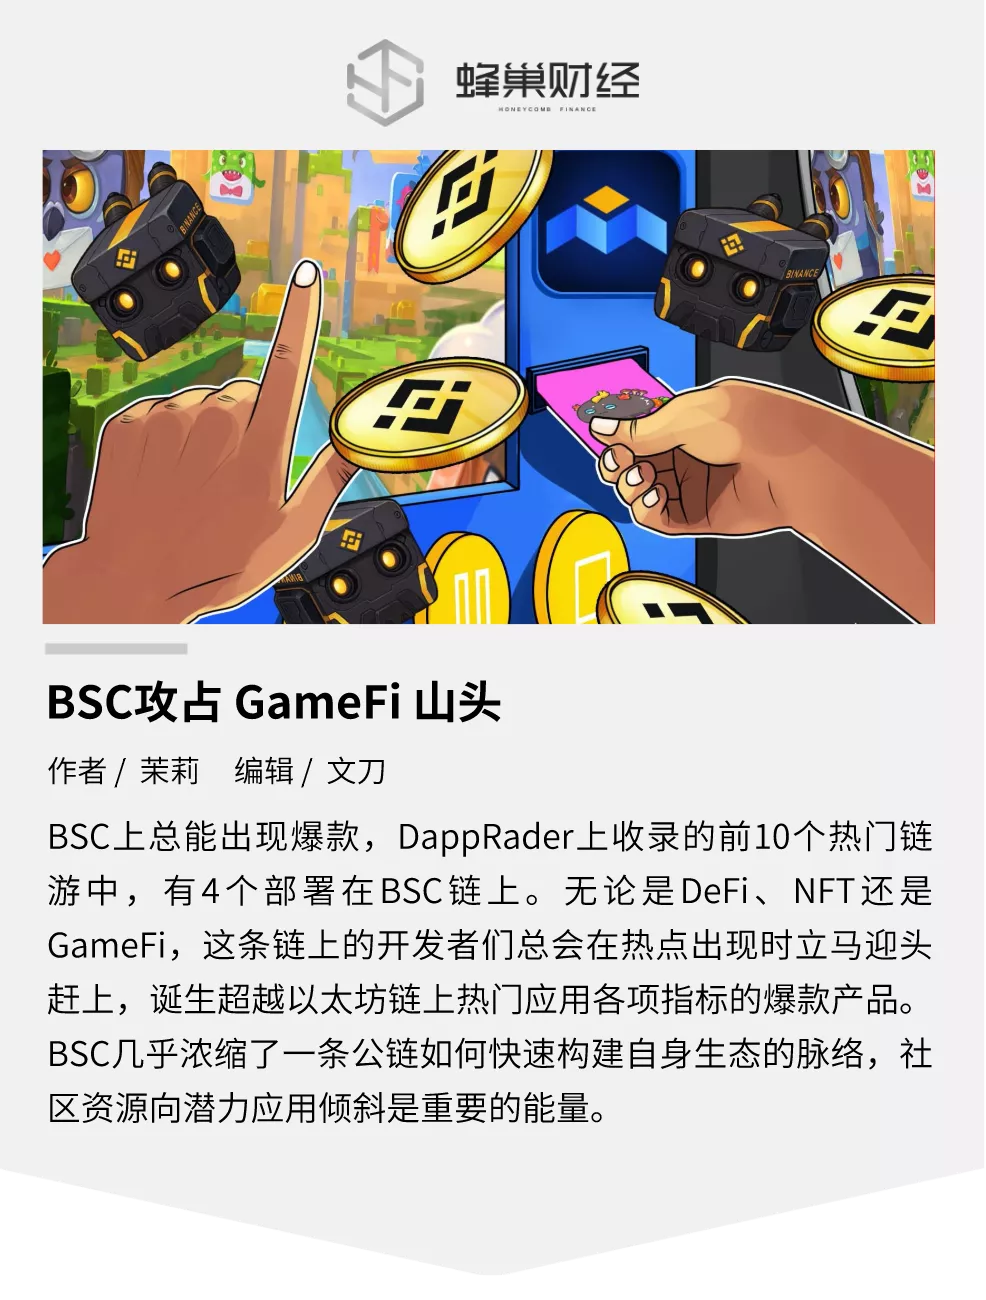 BSC 攻占 GameFi 山头